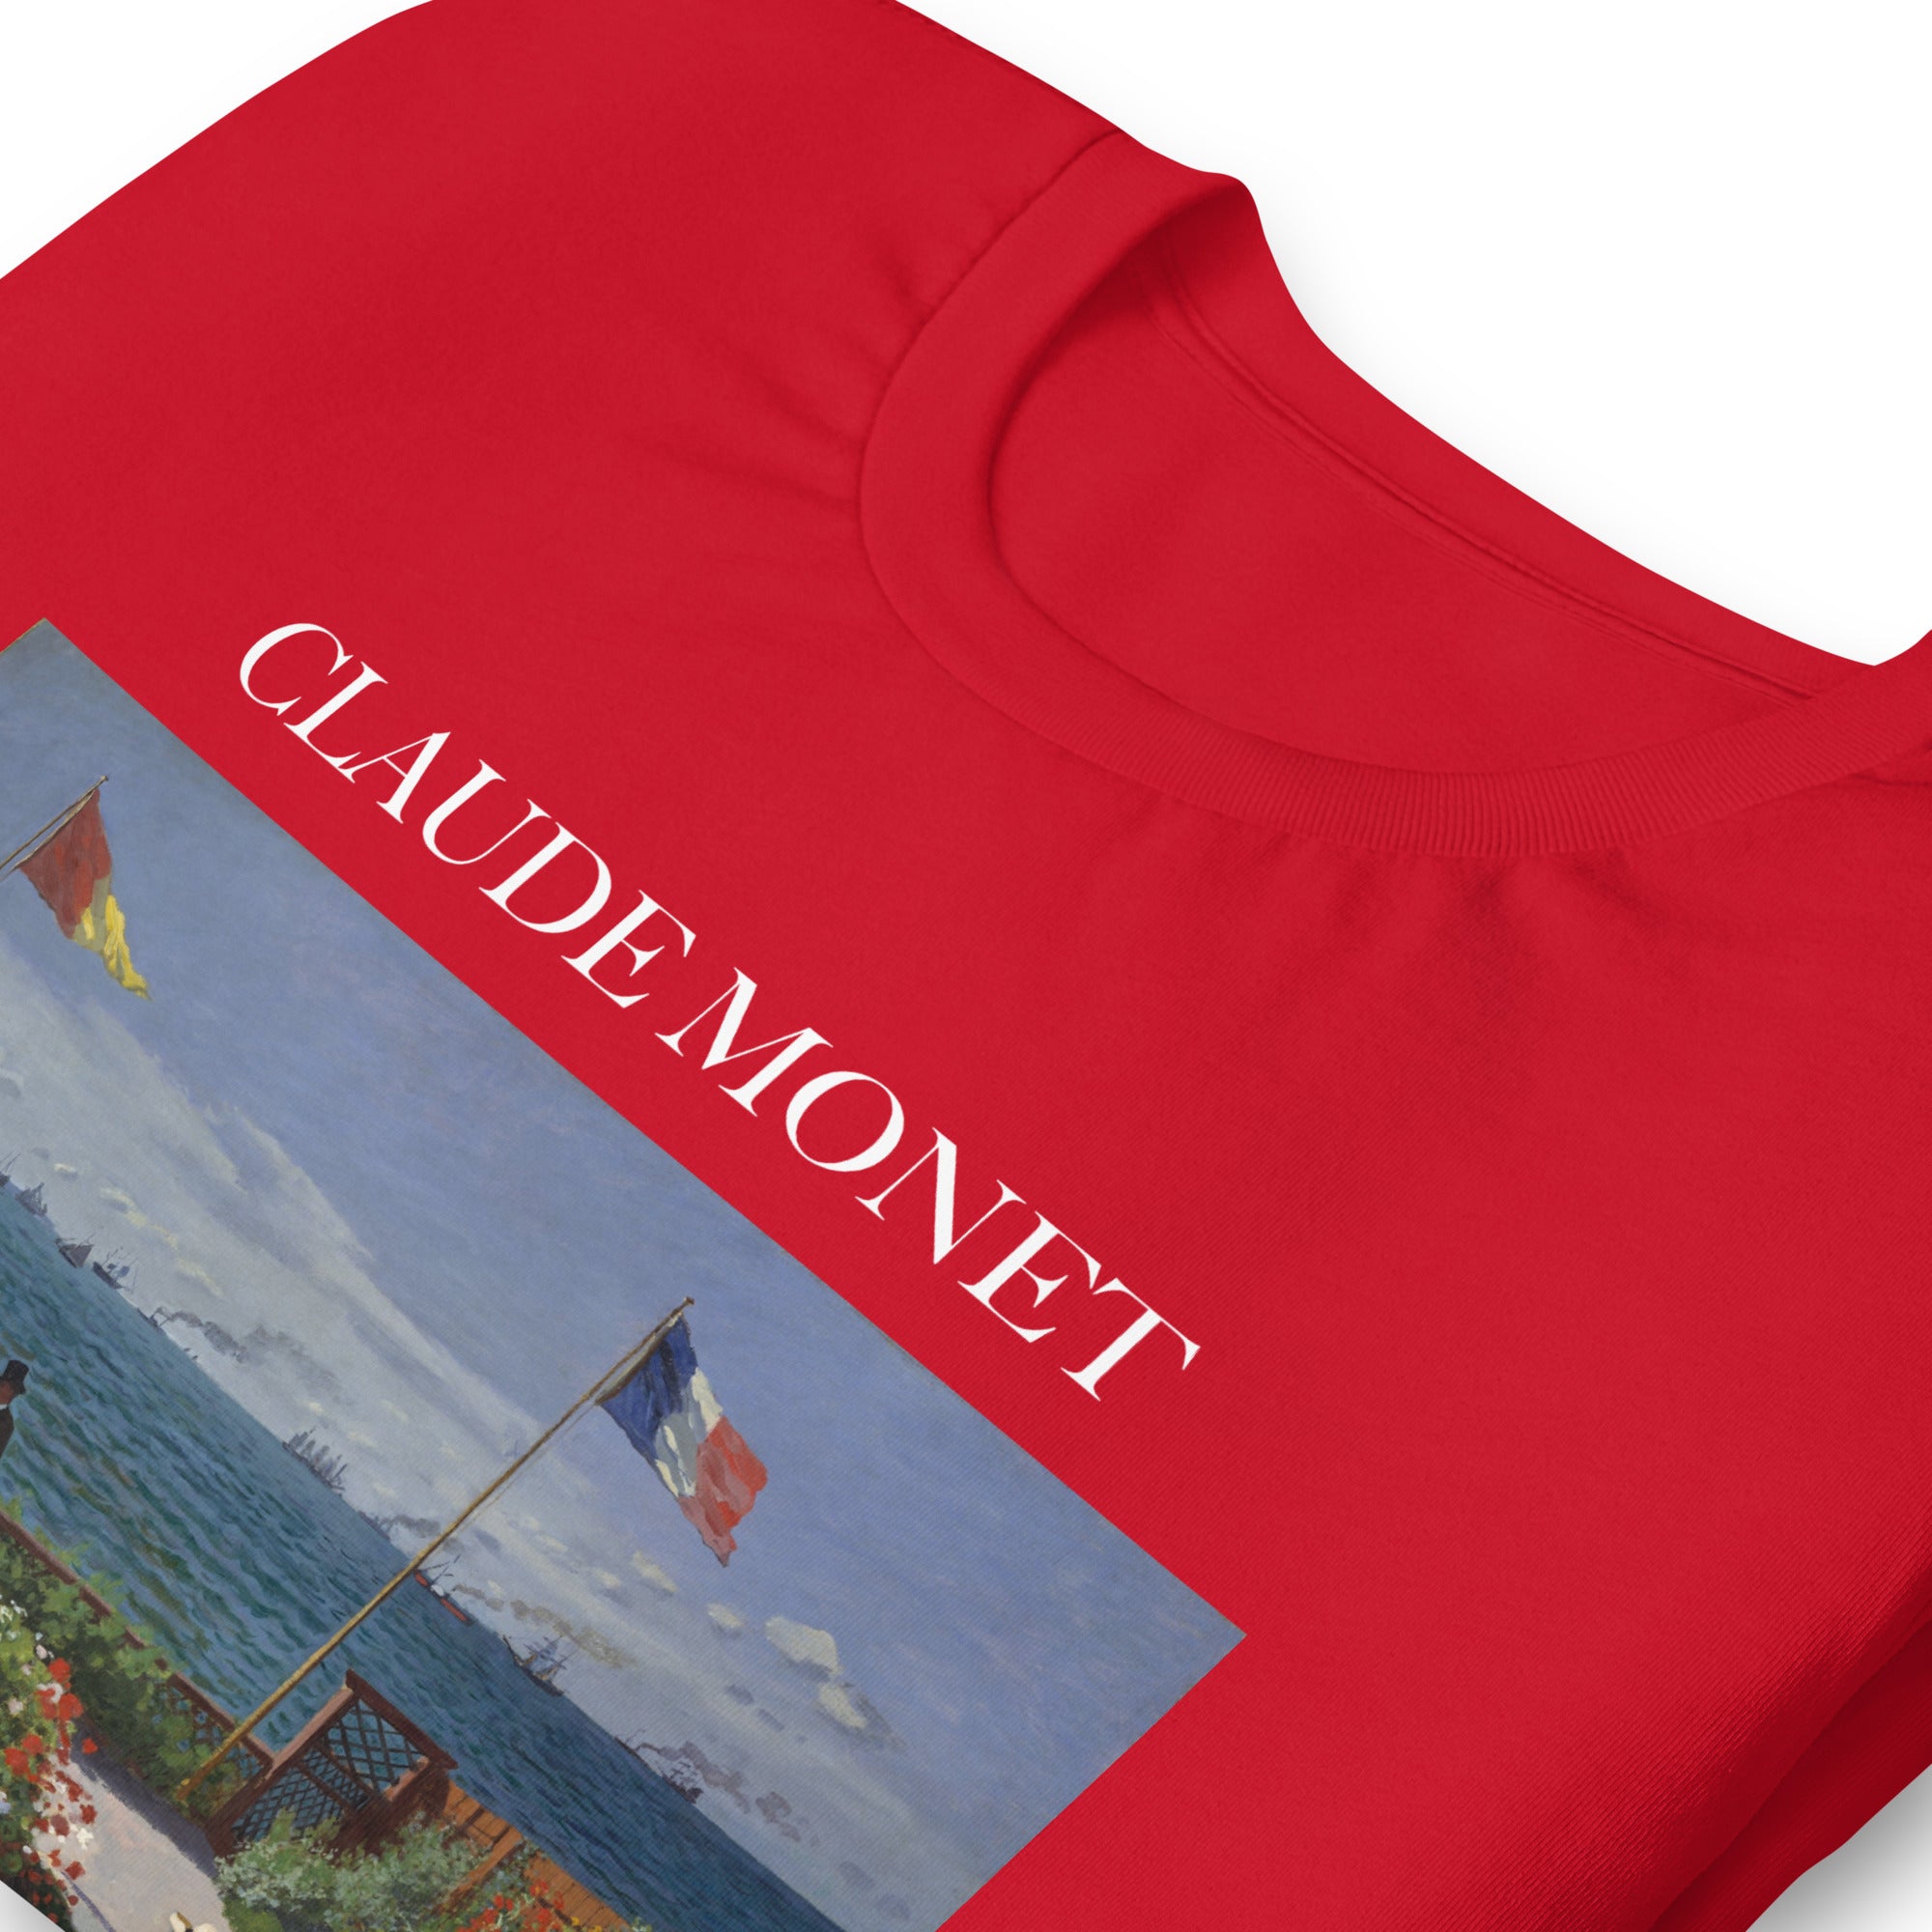 Claude Monet 'The Garden at Sainte-Adresse' Famous Painting T-Shirt | Unisex Classic Art Tee